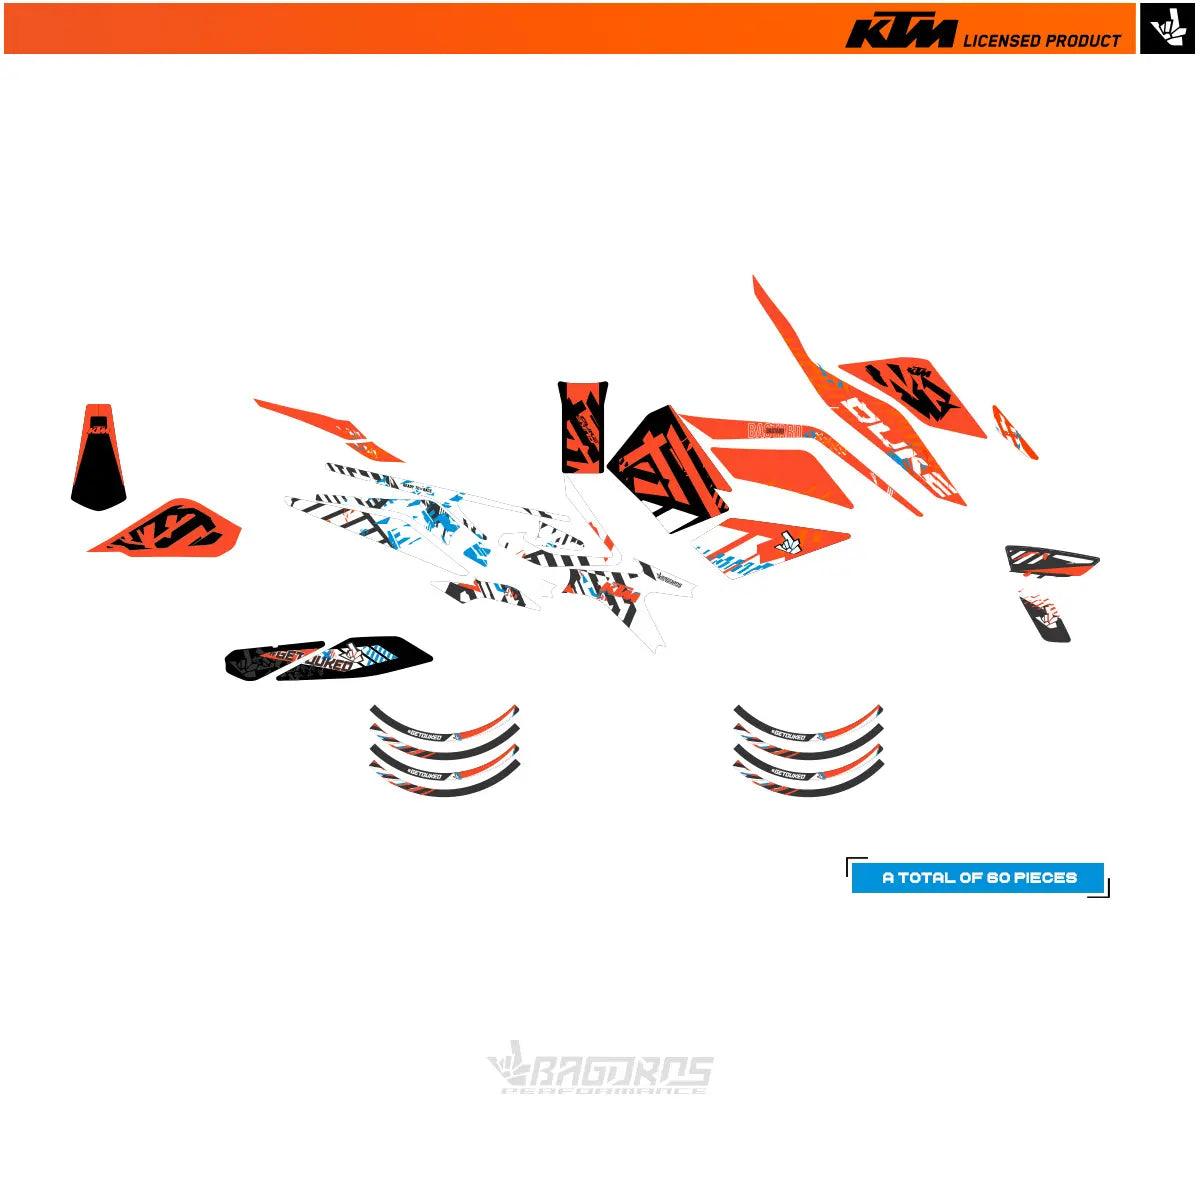 Kit déco "BASTARD" BAGOROS PERFORMANCE | KTM DUKE 790 / 890 / 890R - GEN PERFORMANCE